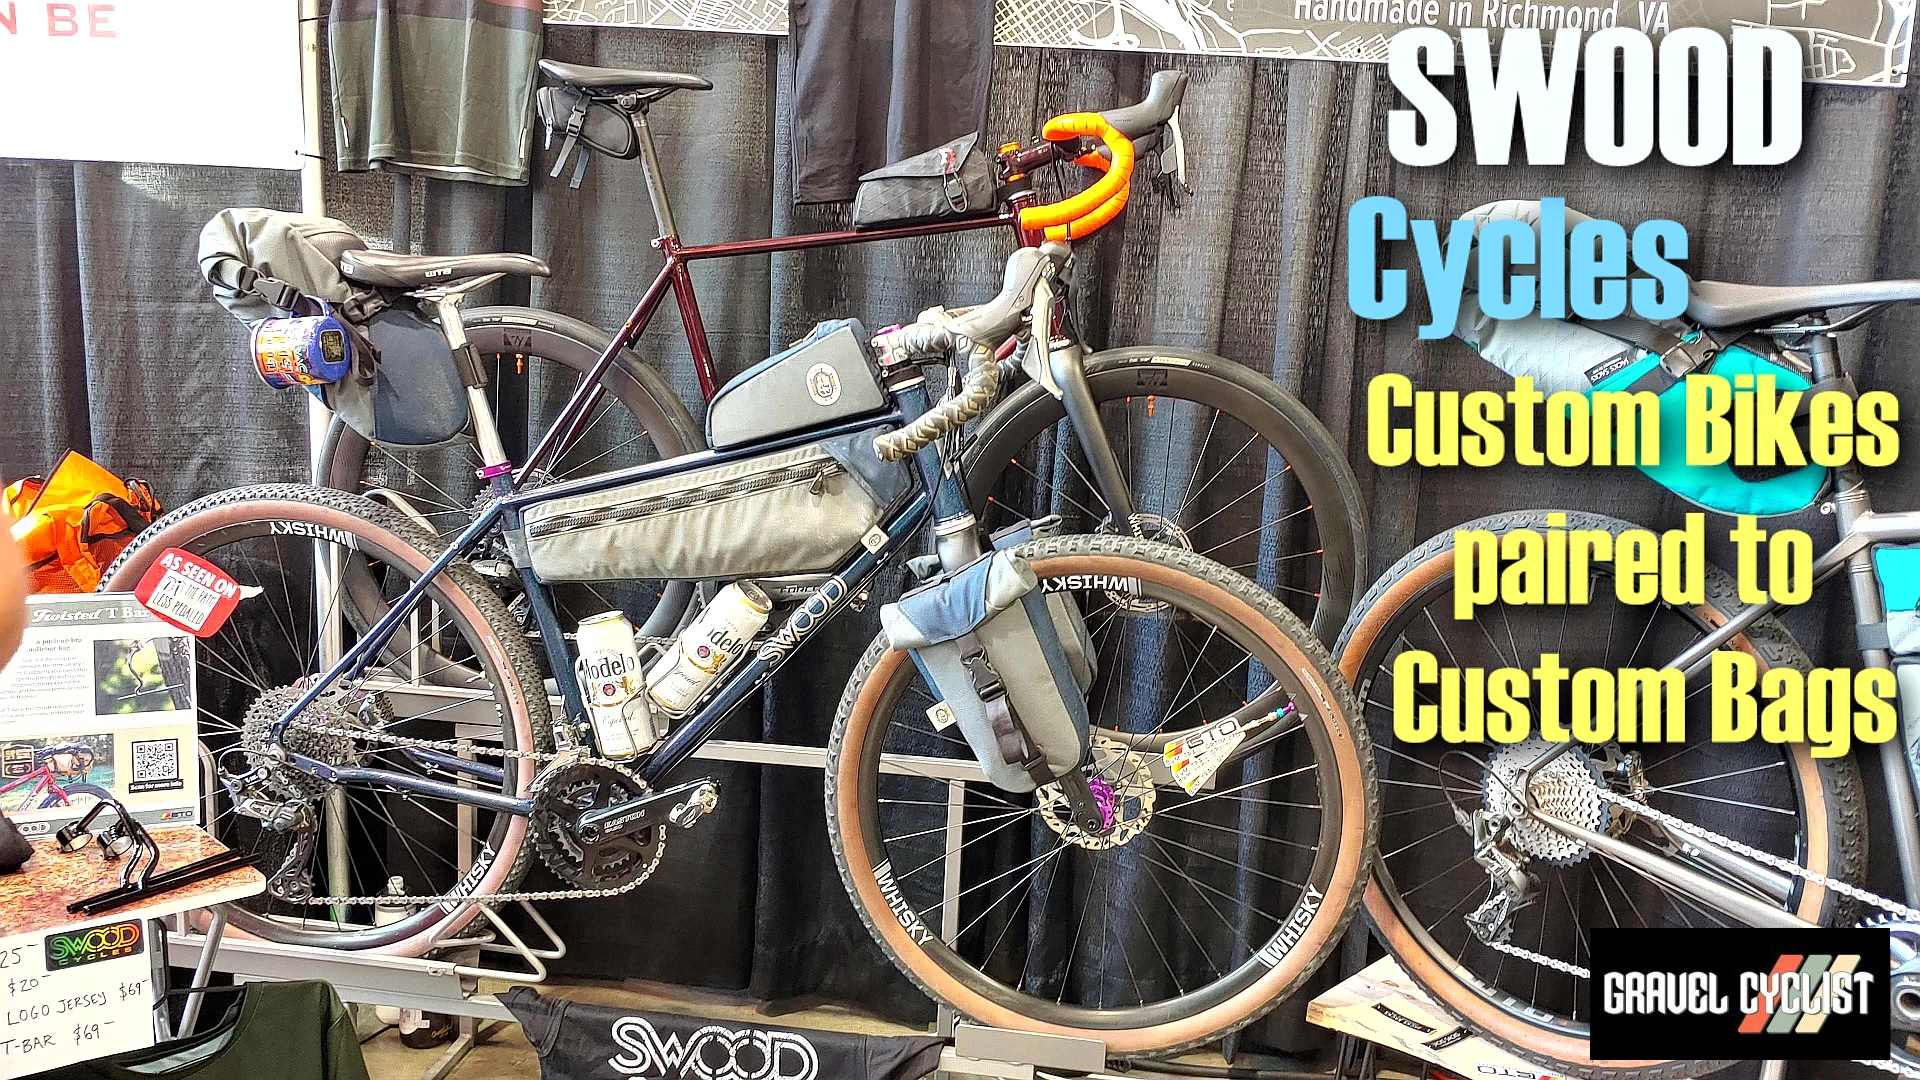 swood cycles custom bike review